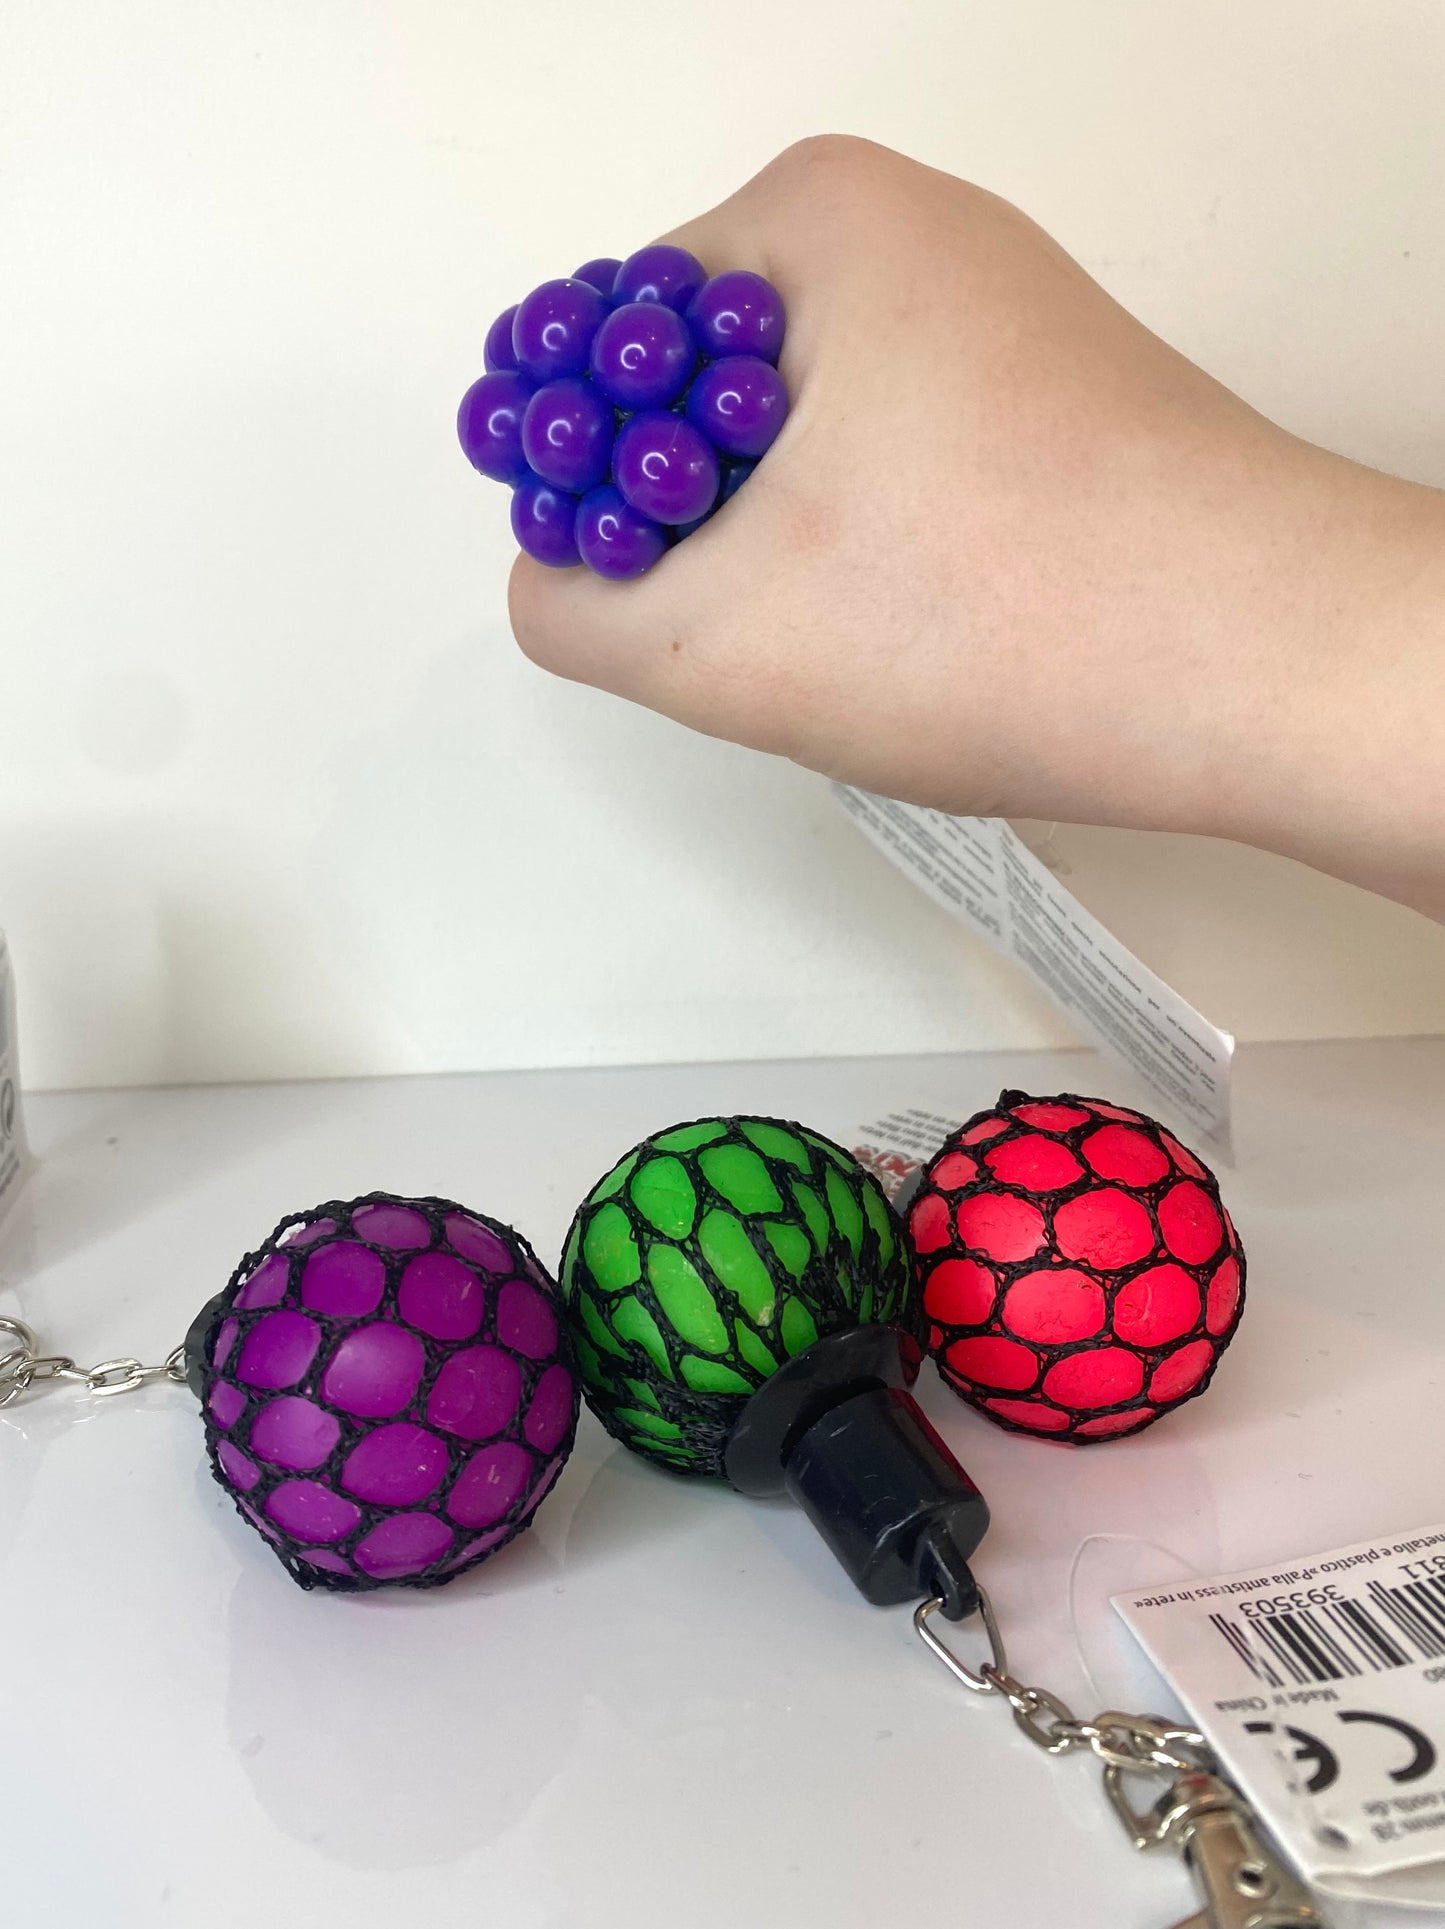 Colour change mesh ball keychain